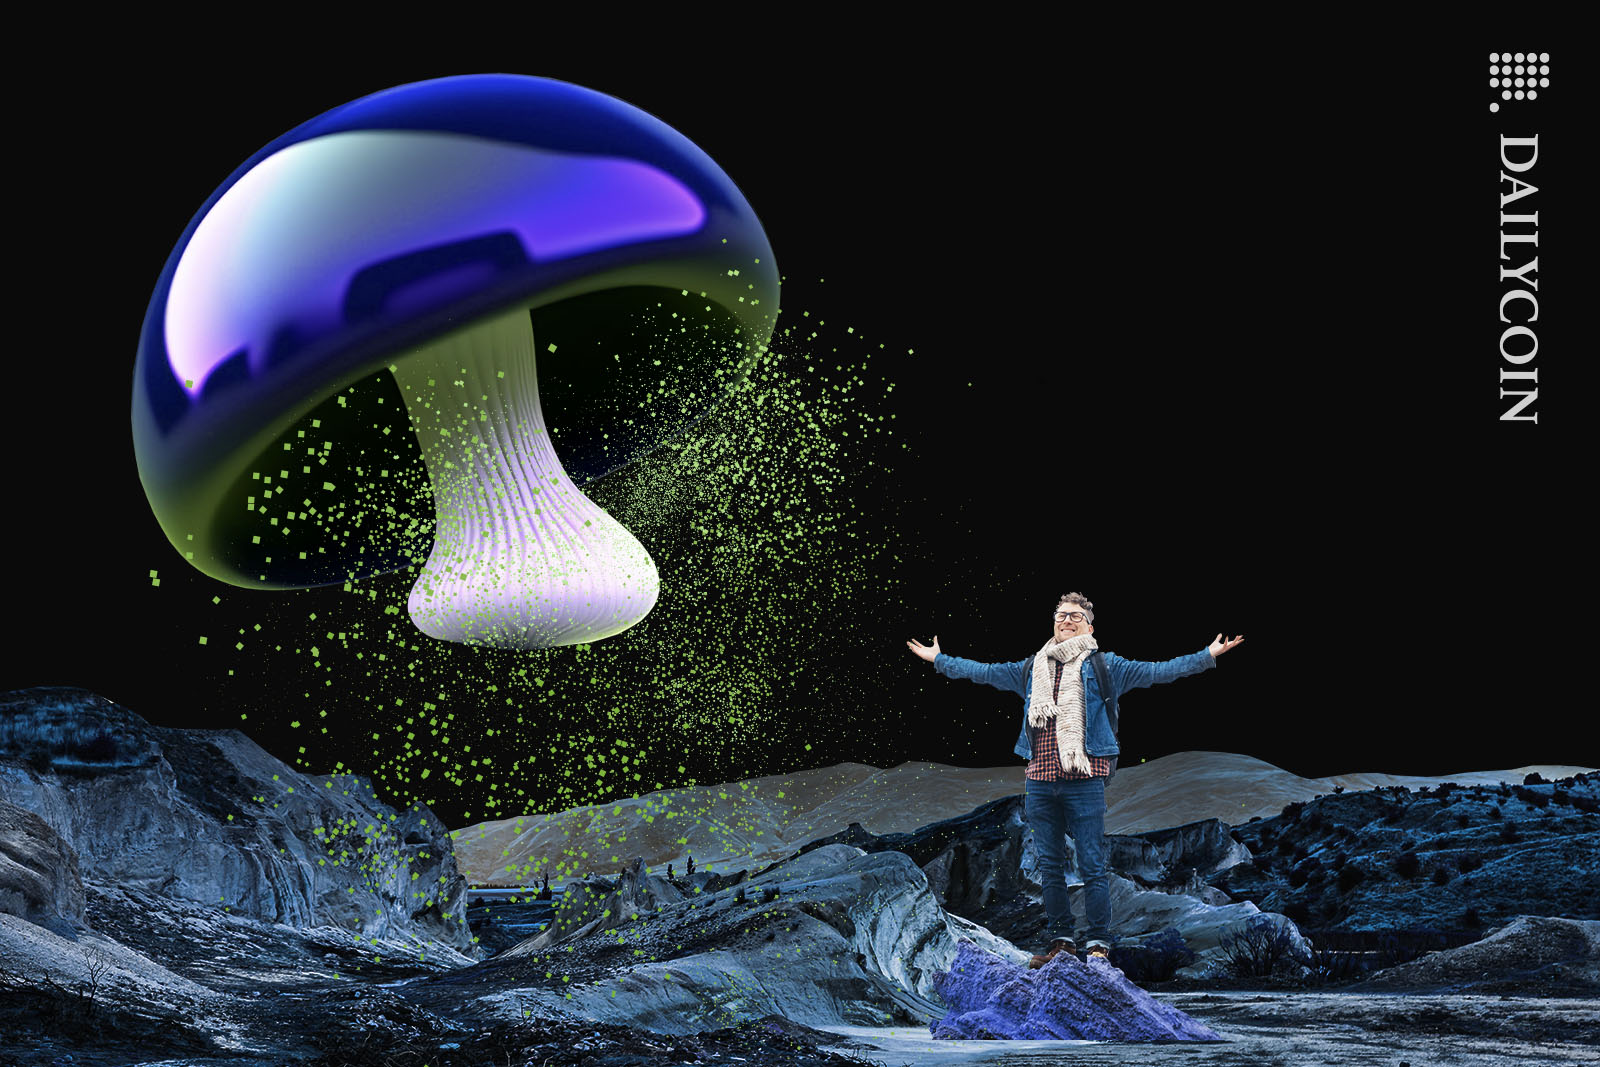 Large blue mushroom floating above ground releasing hundreds of green spores.